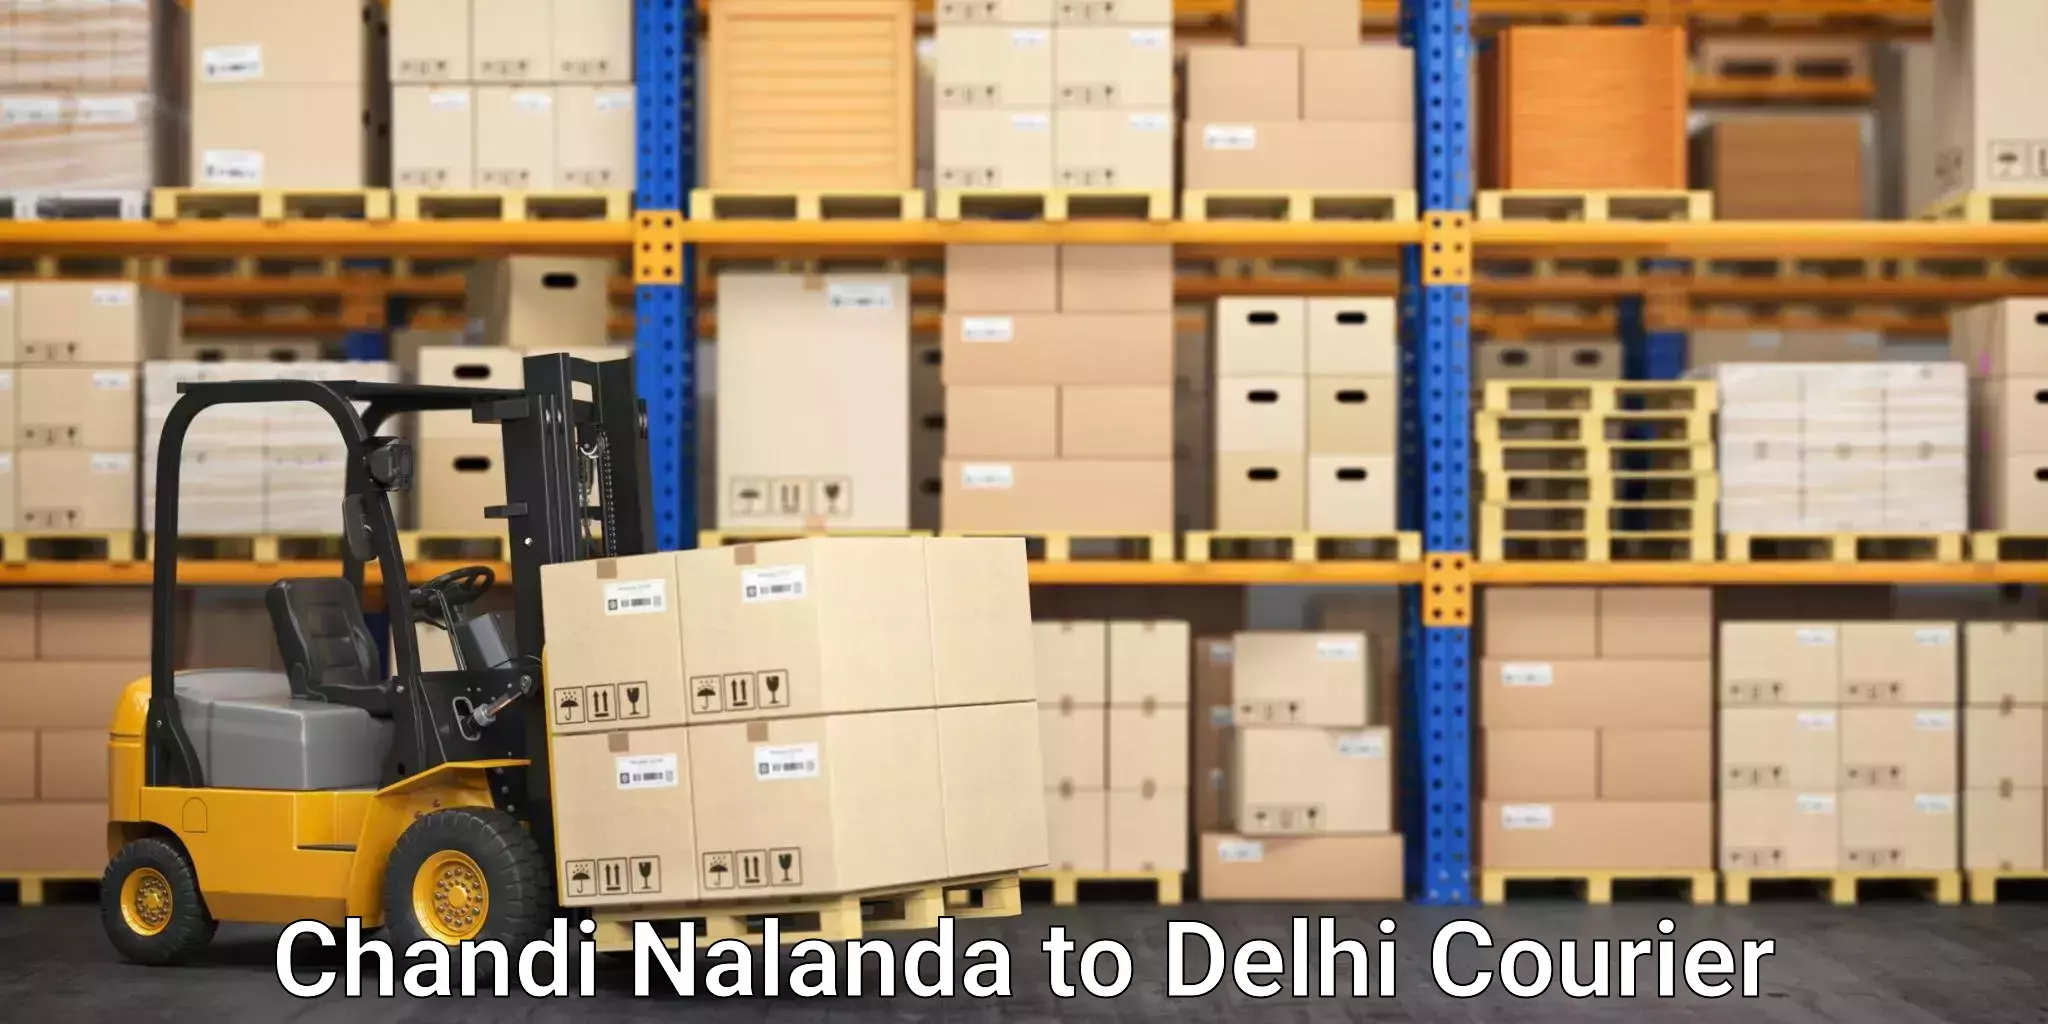 Quality moving and storage Chandi Nalanda to Lodhi Road